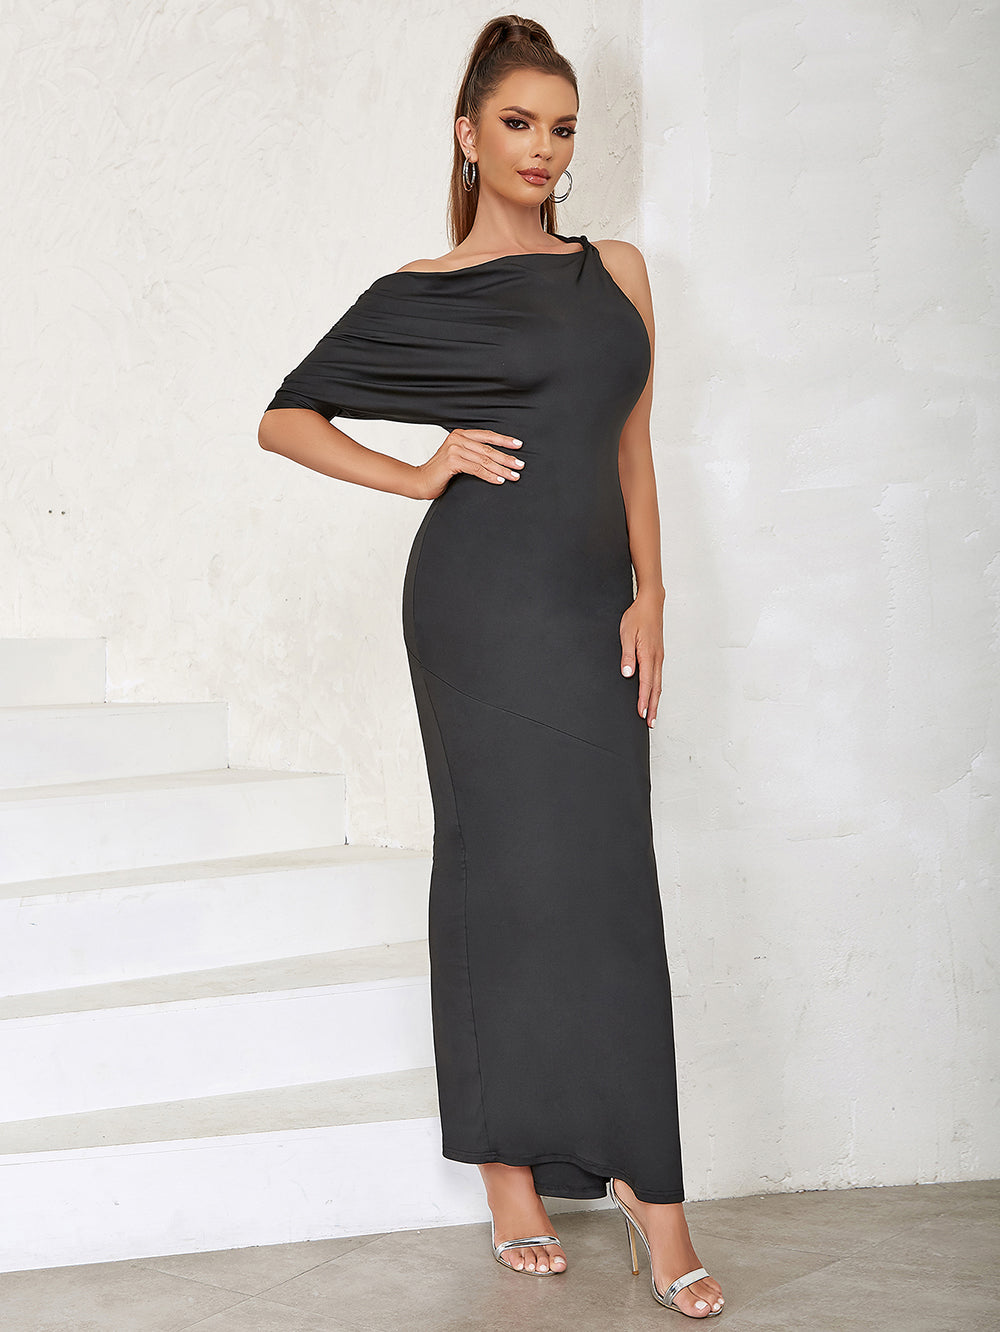 Black Bodycon Dress HB0241